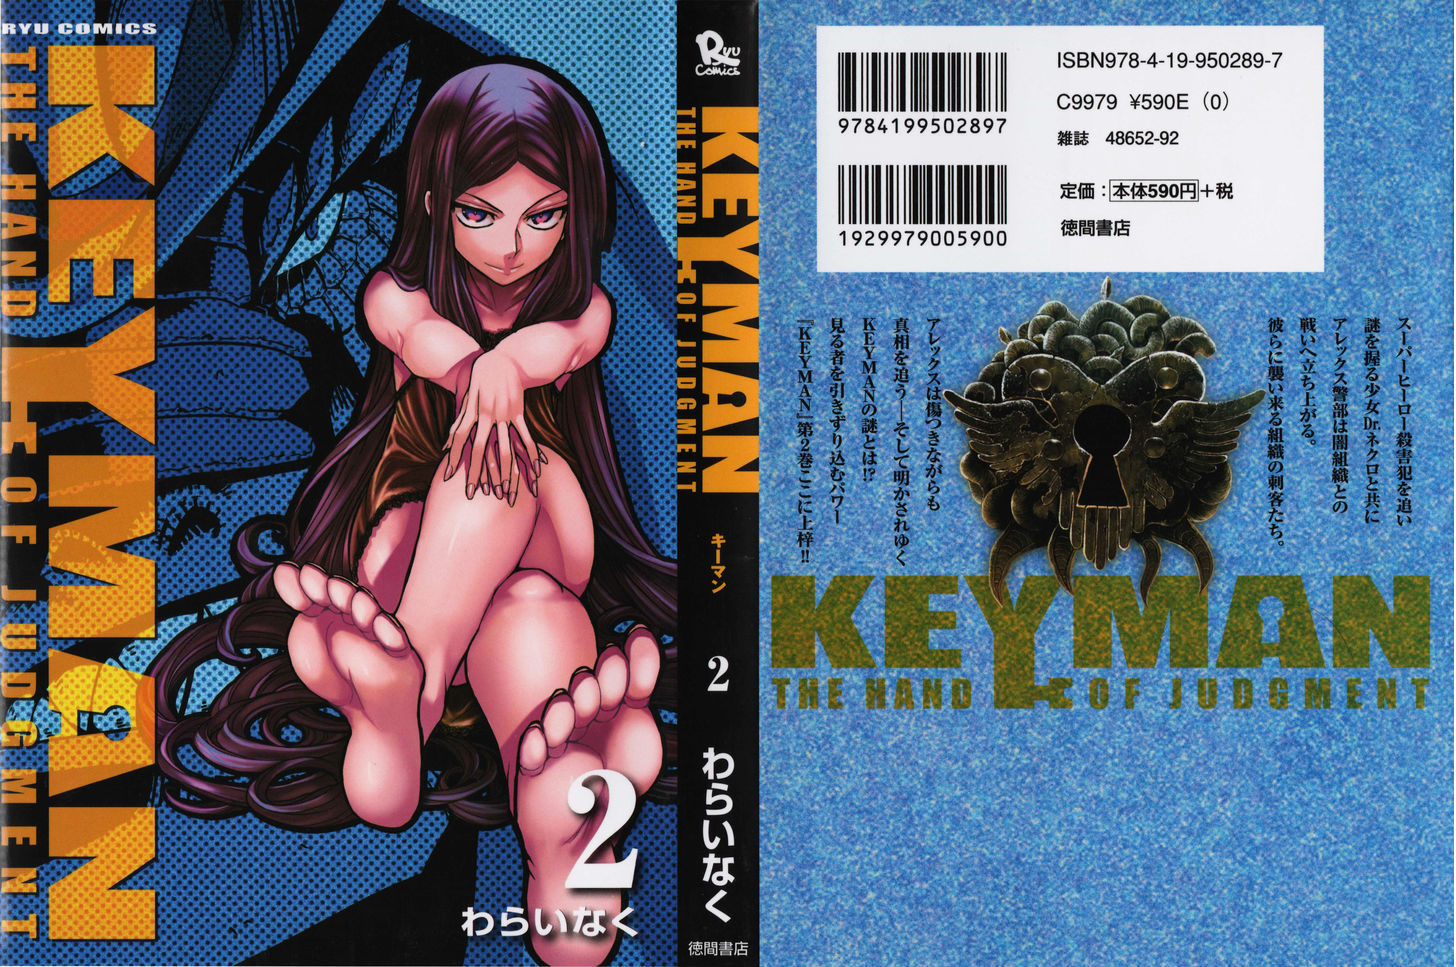 Keyman - The Hand of Judgement 6